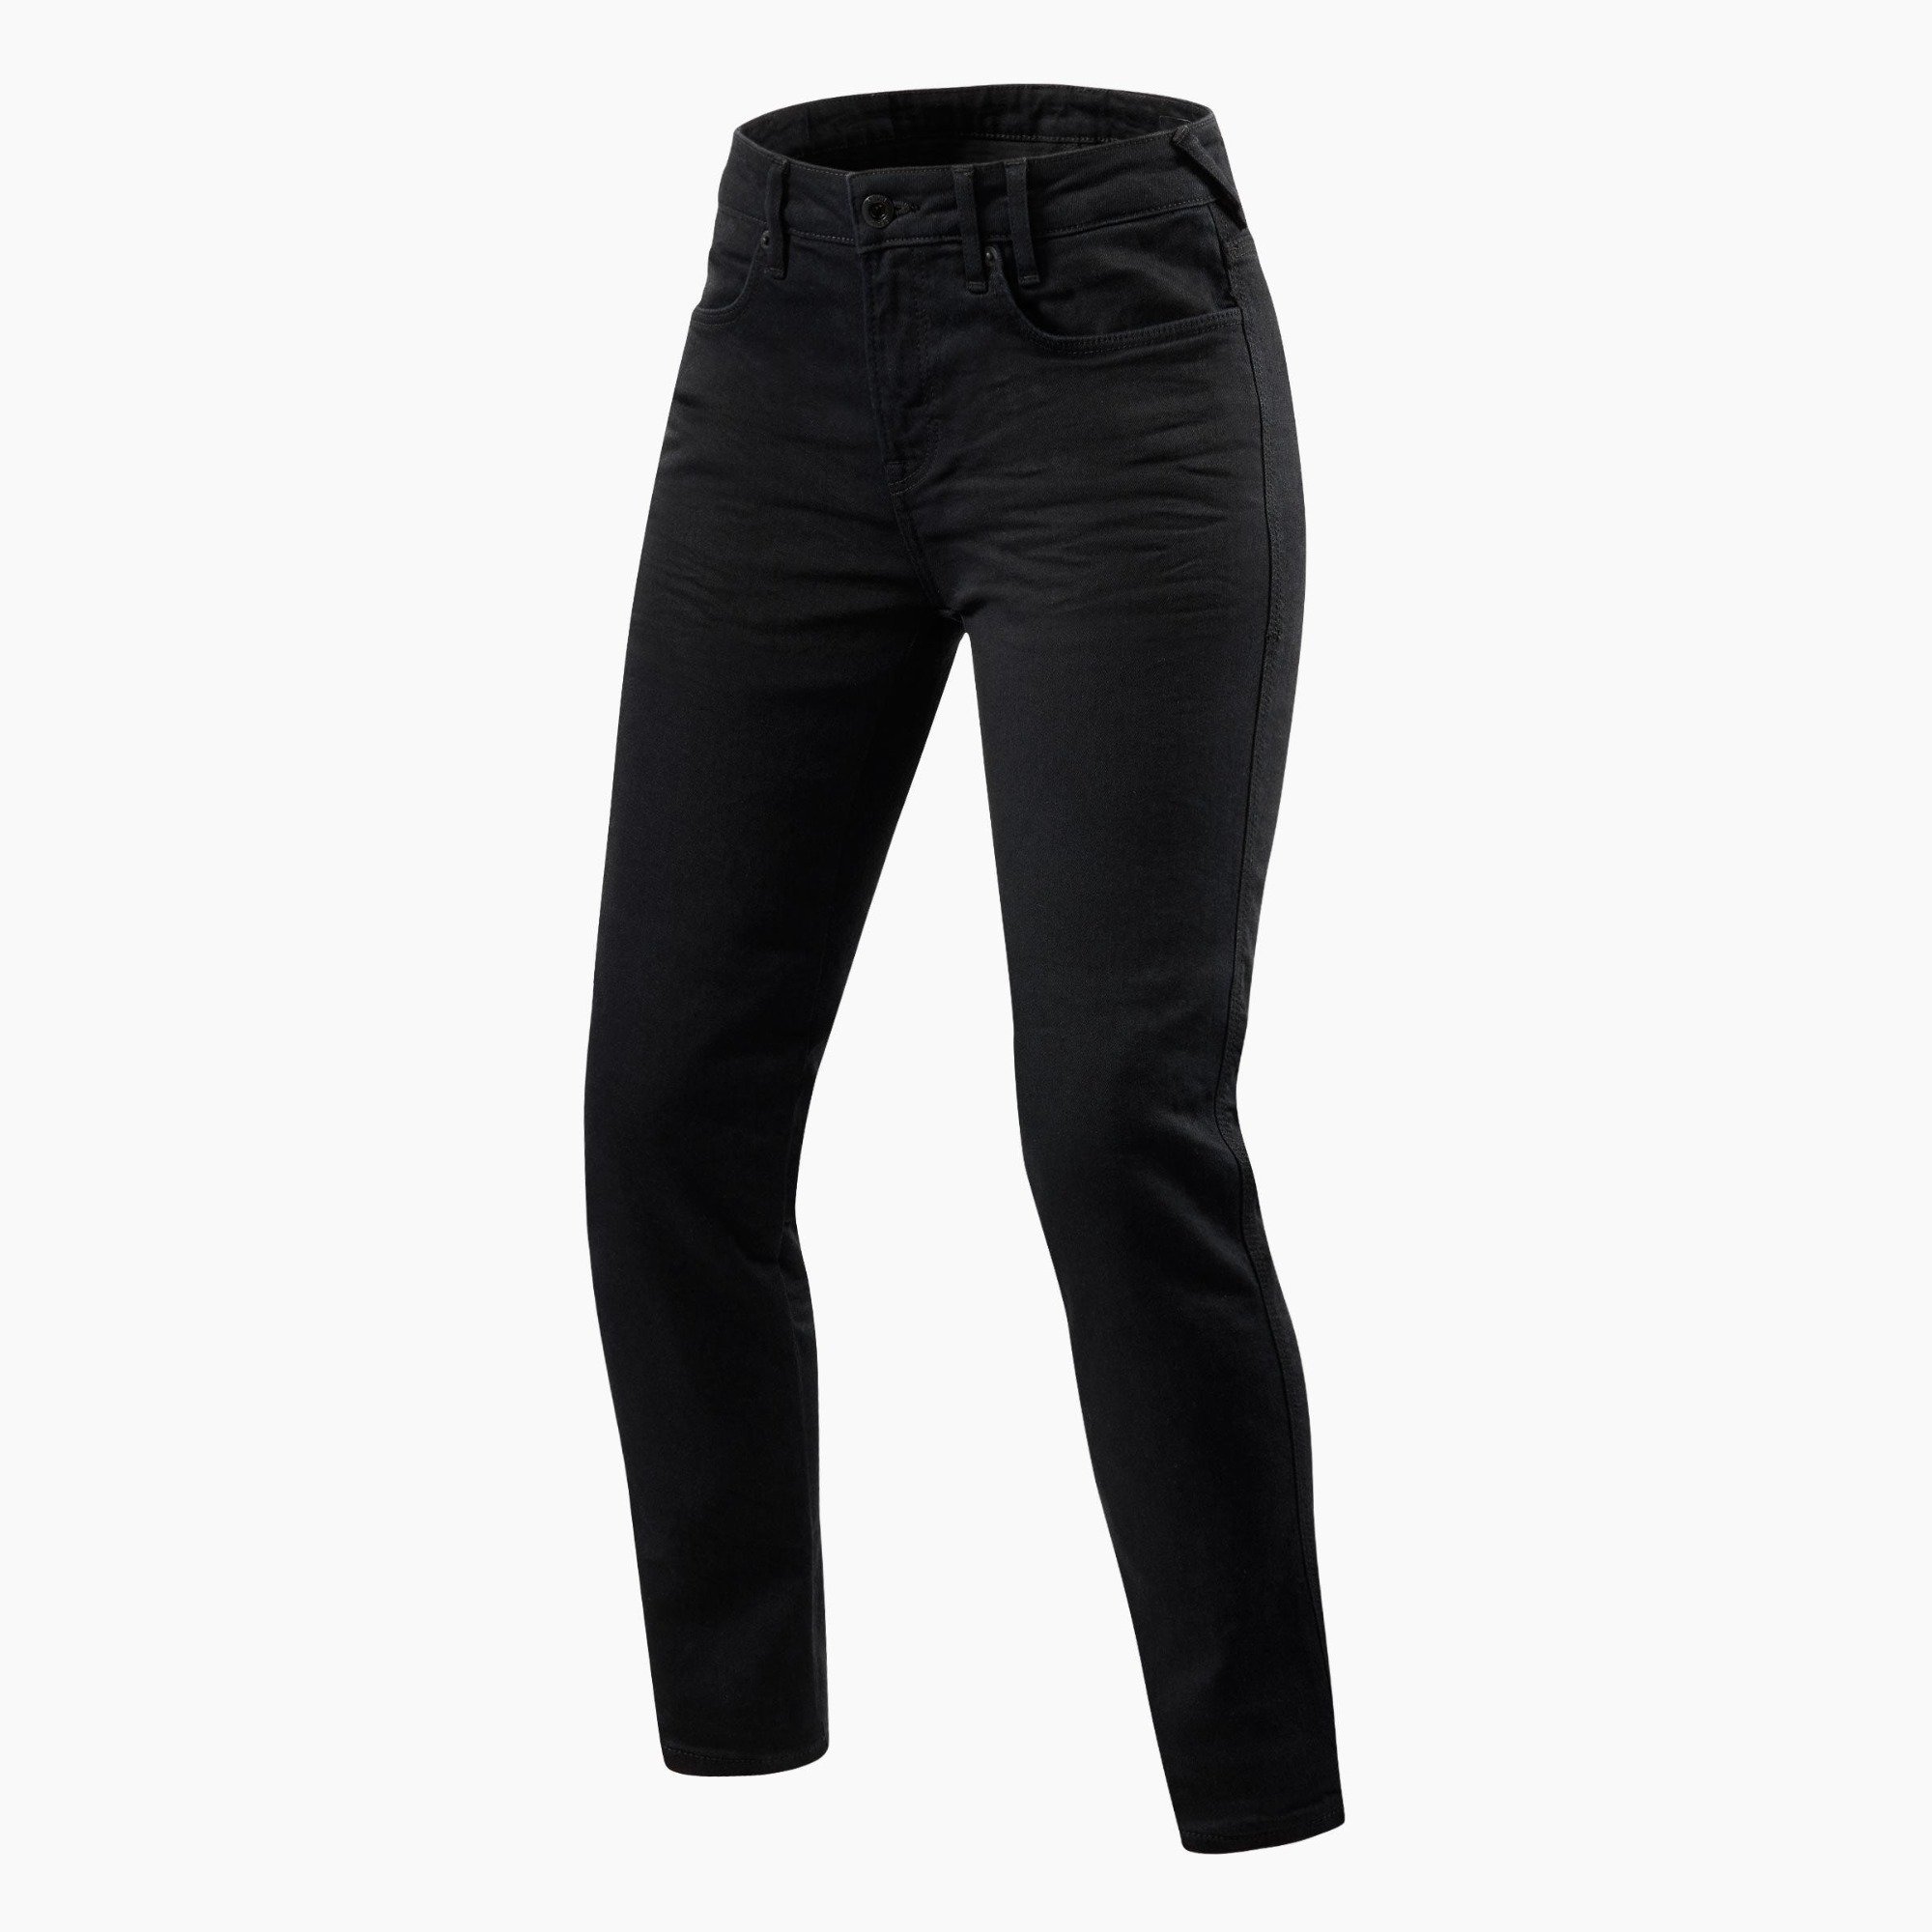 Image of REV'IT! Jeans Maple 2 Ladies SK Black Motorcycle Jeans Size L32/W28 EN